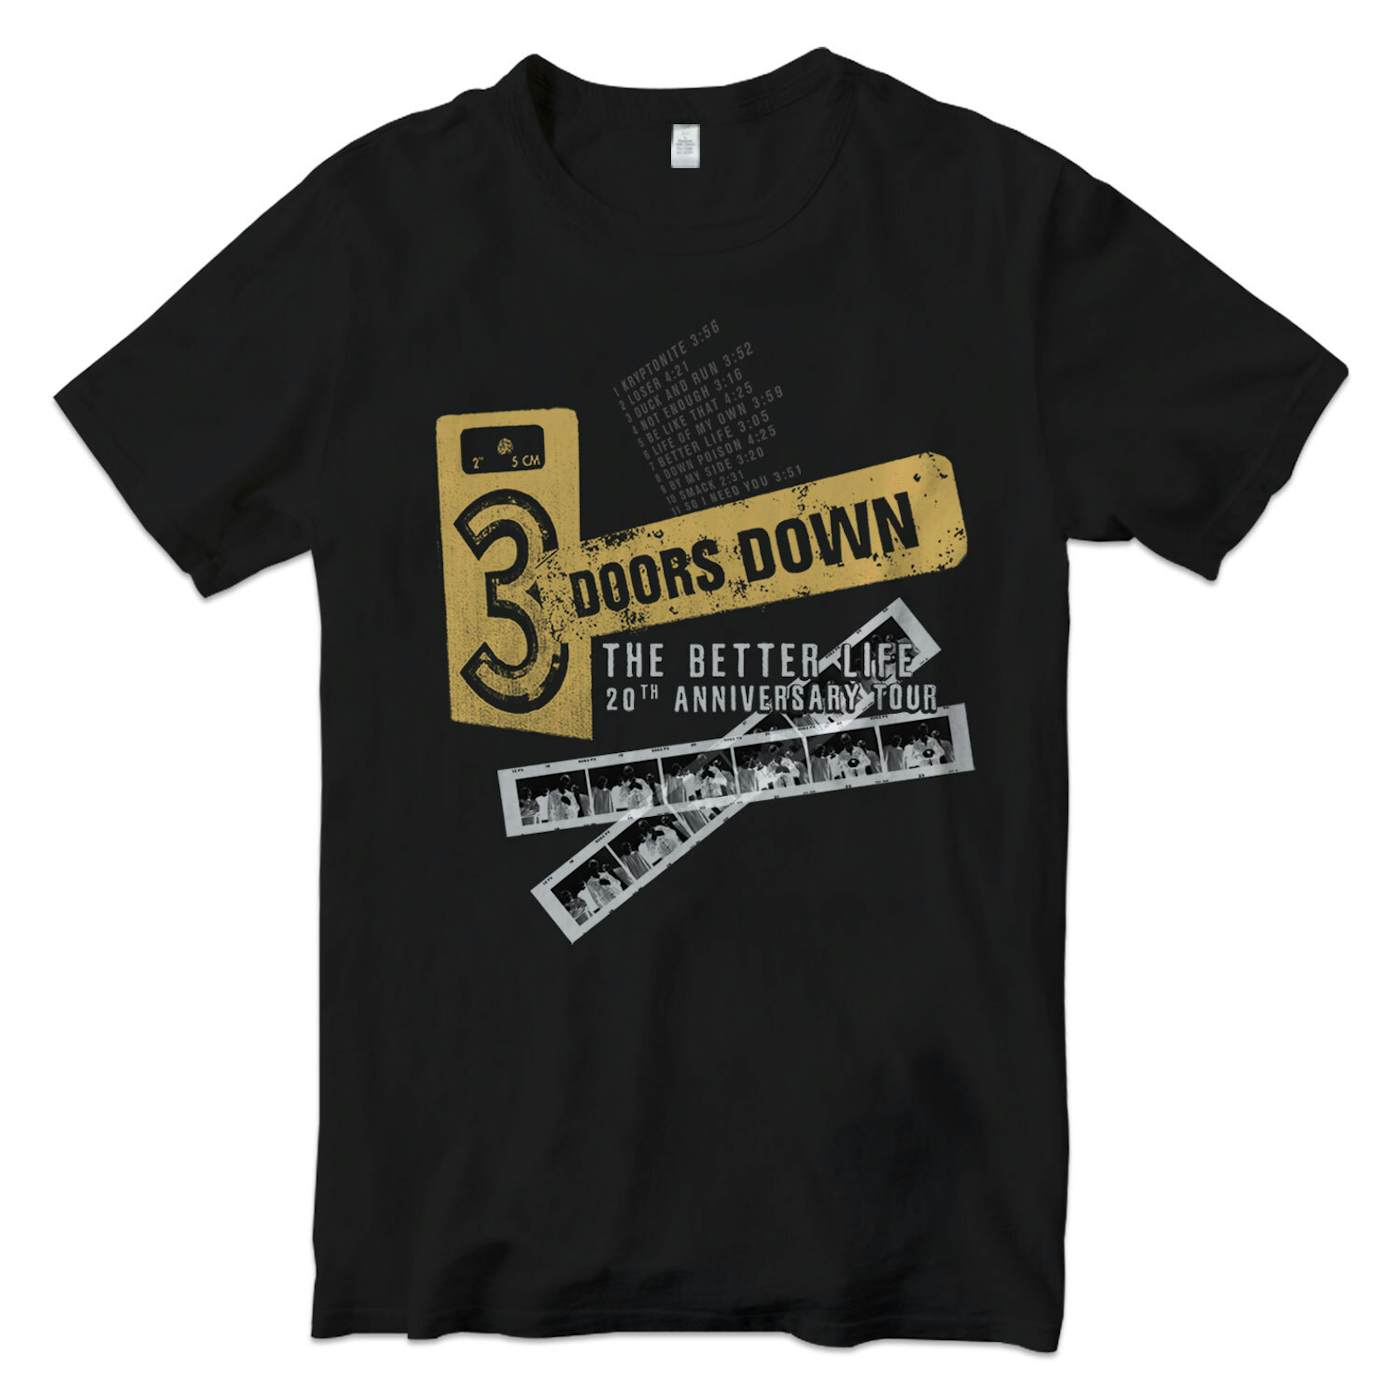 3 Doors Down 20th Anniversary Tour Tee